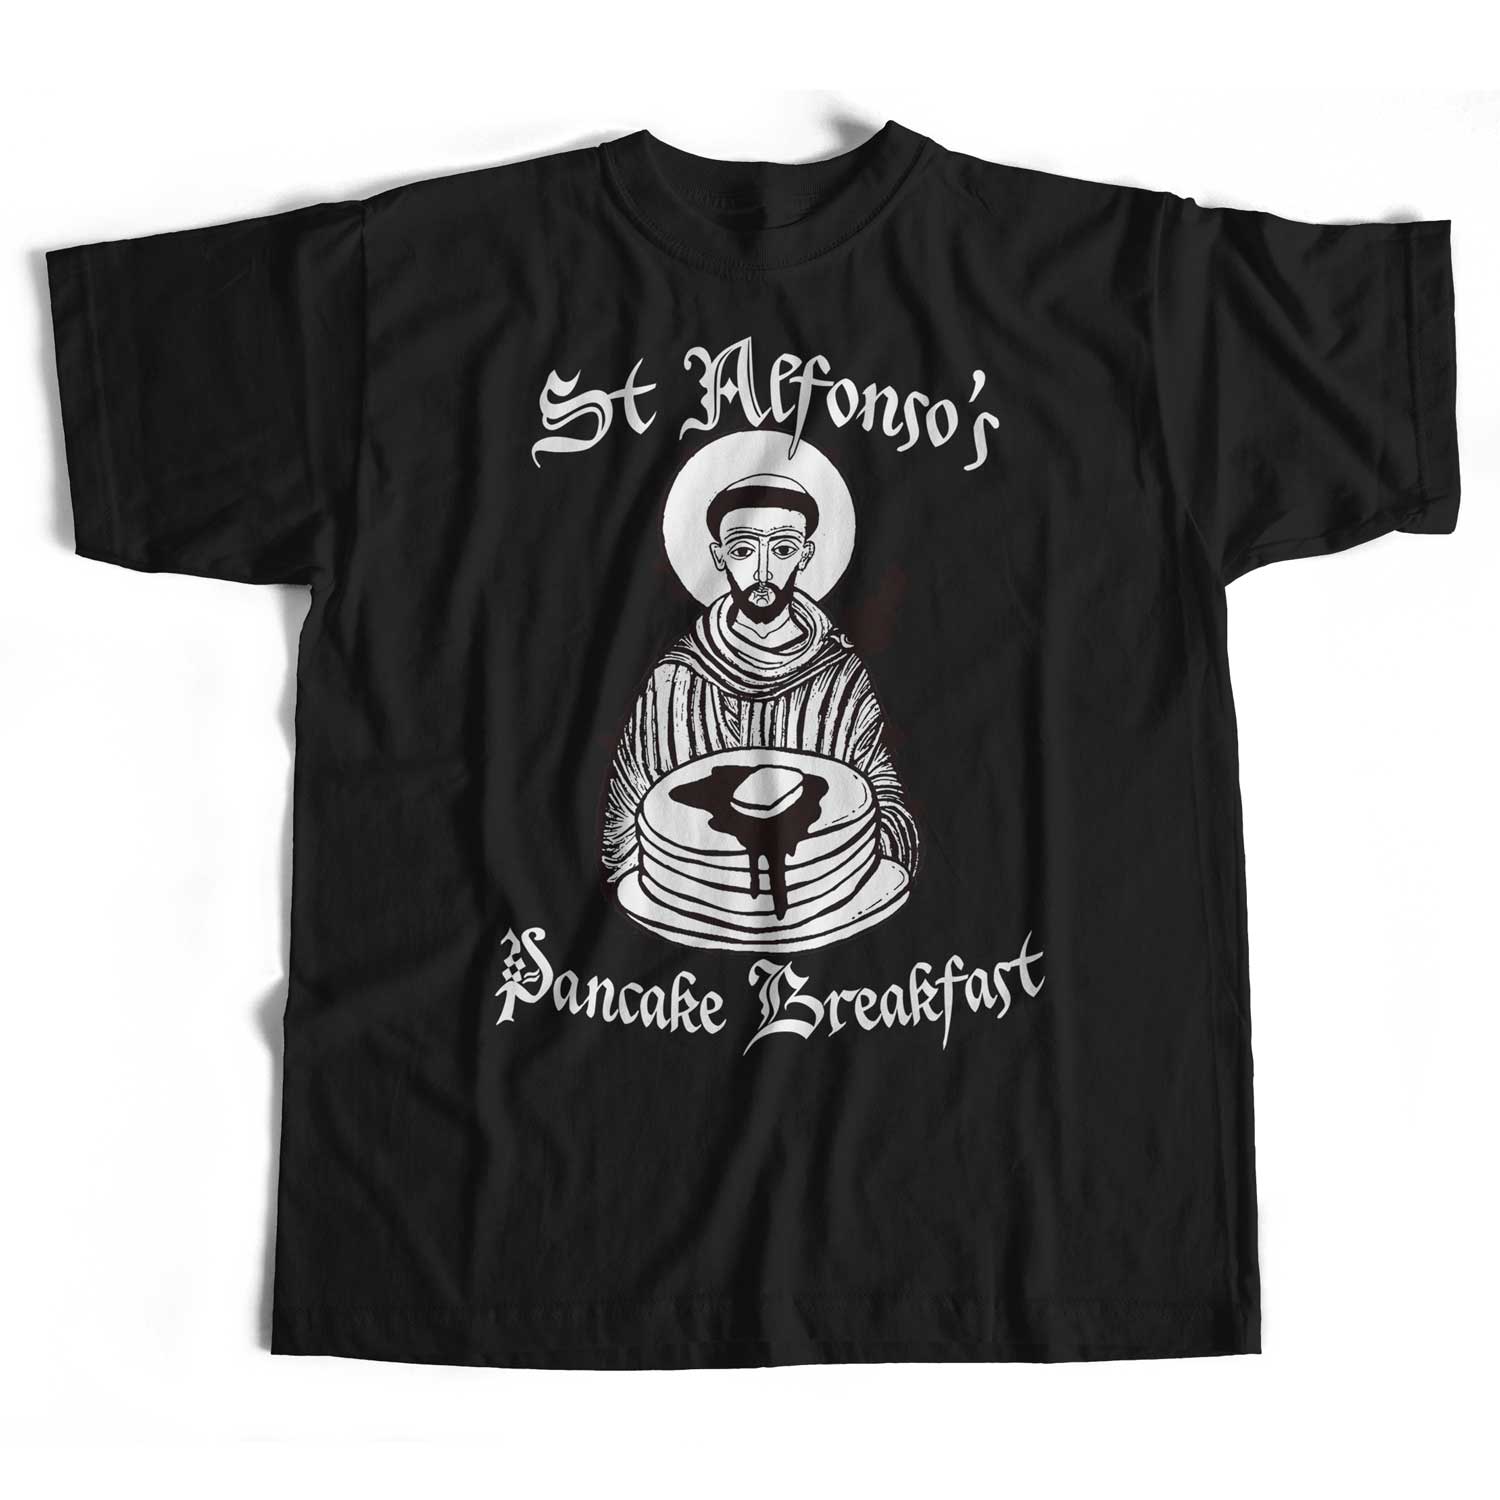 St Alfonso's Pancake Breakfast T Shirt